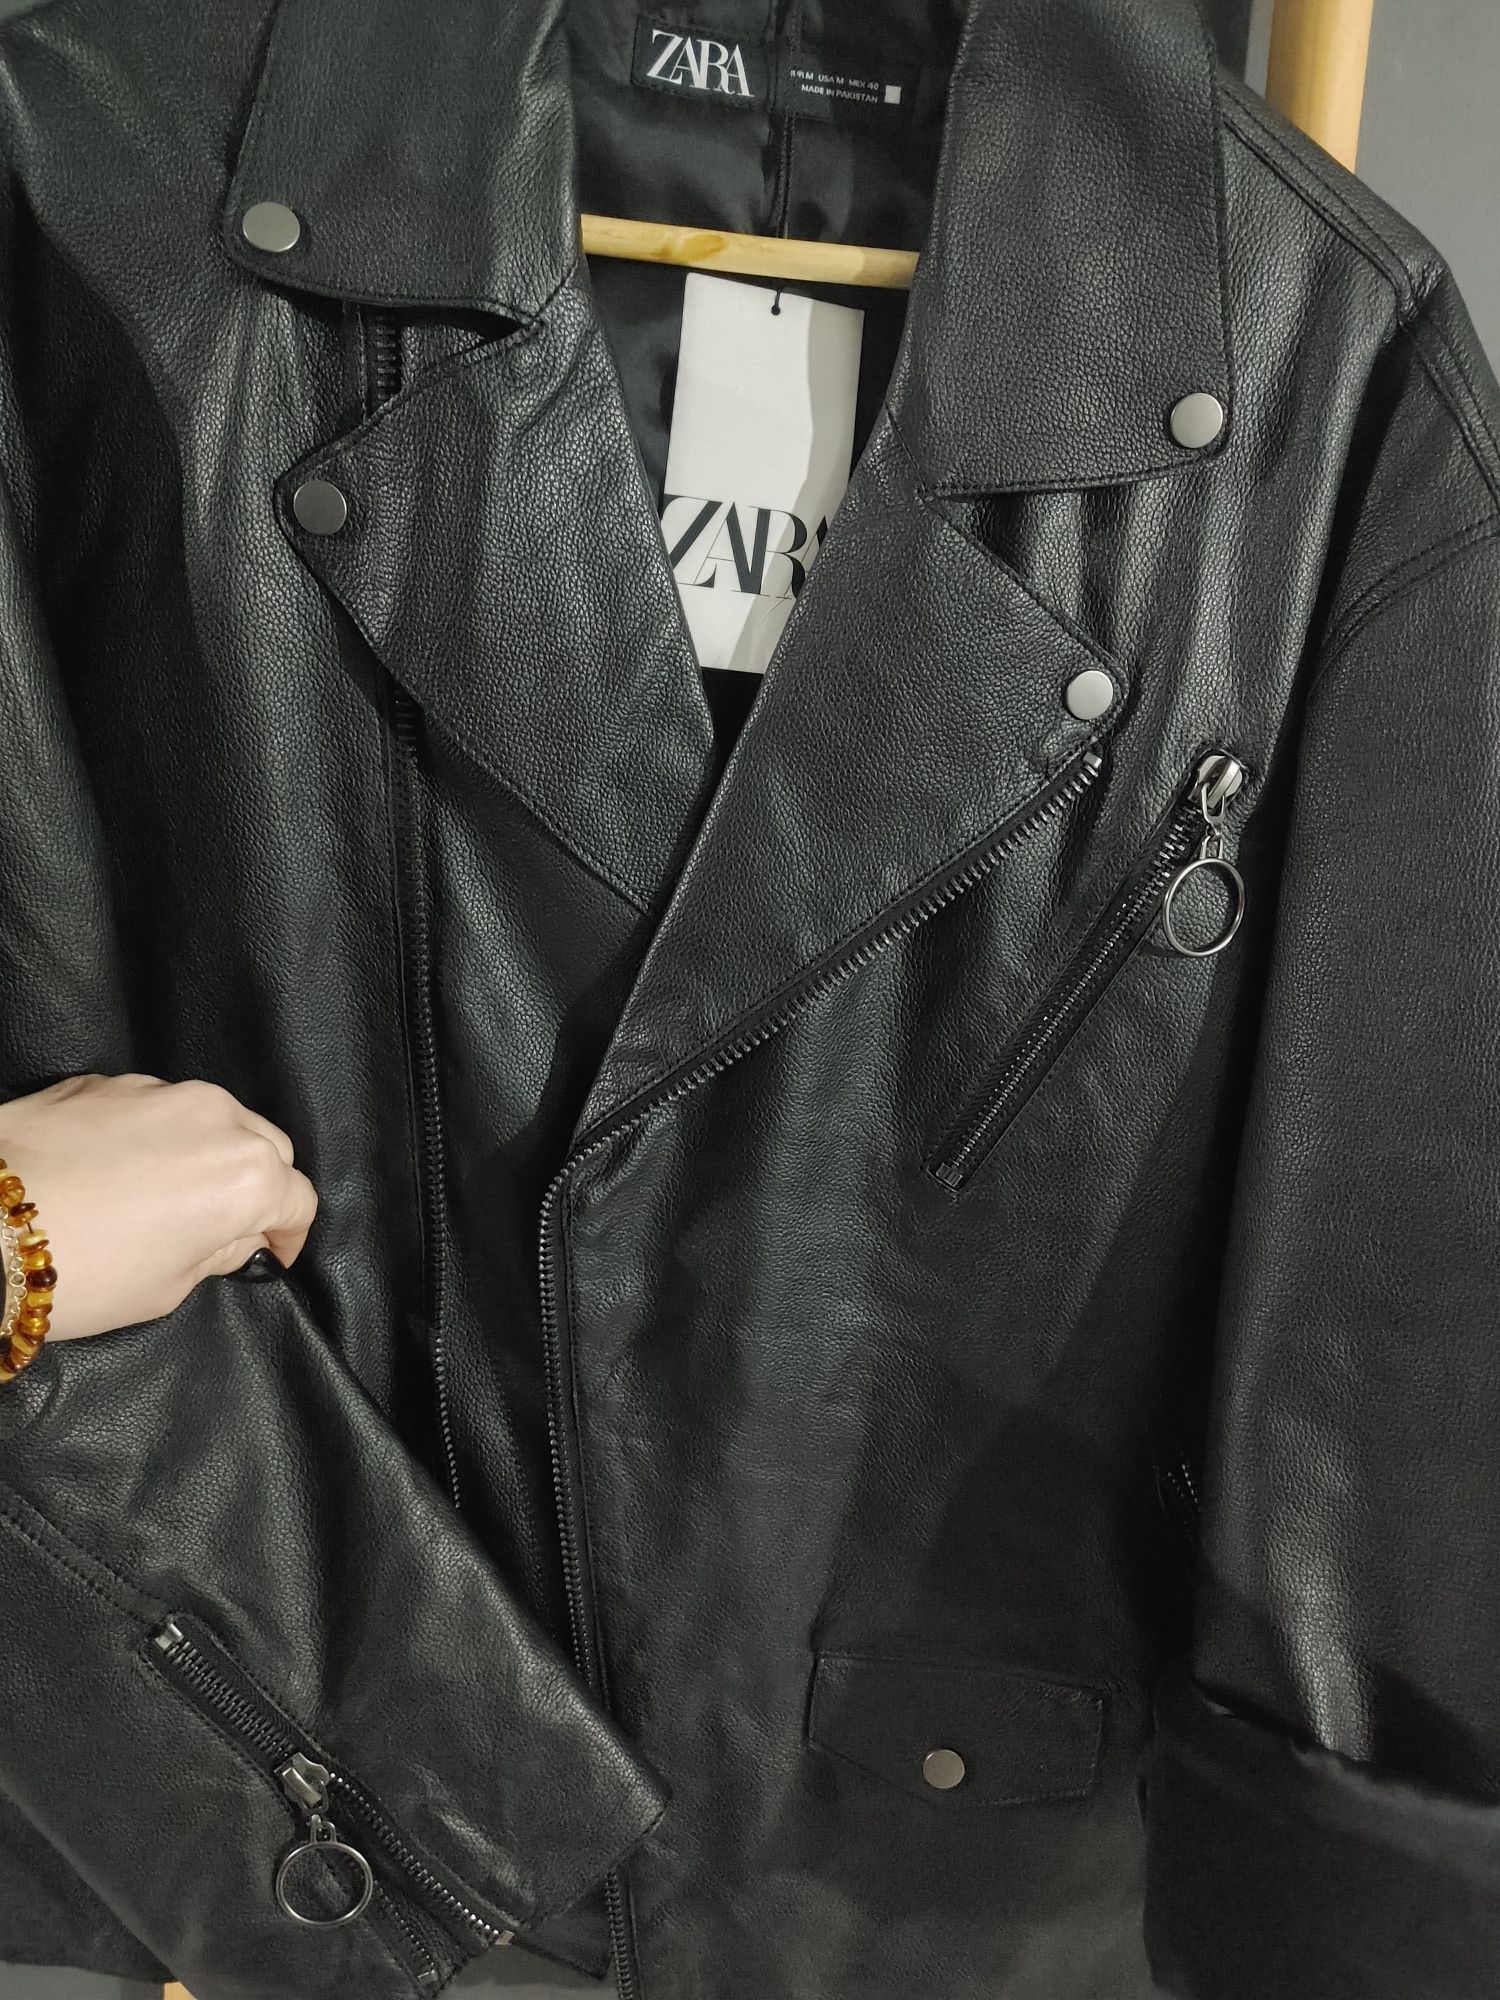 Zara ramoneska kurtka oversize skóra naturalna M L XL